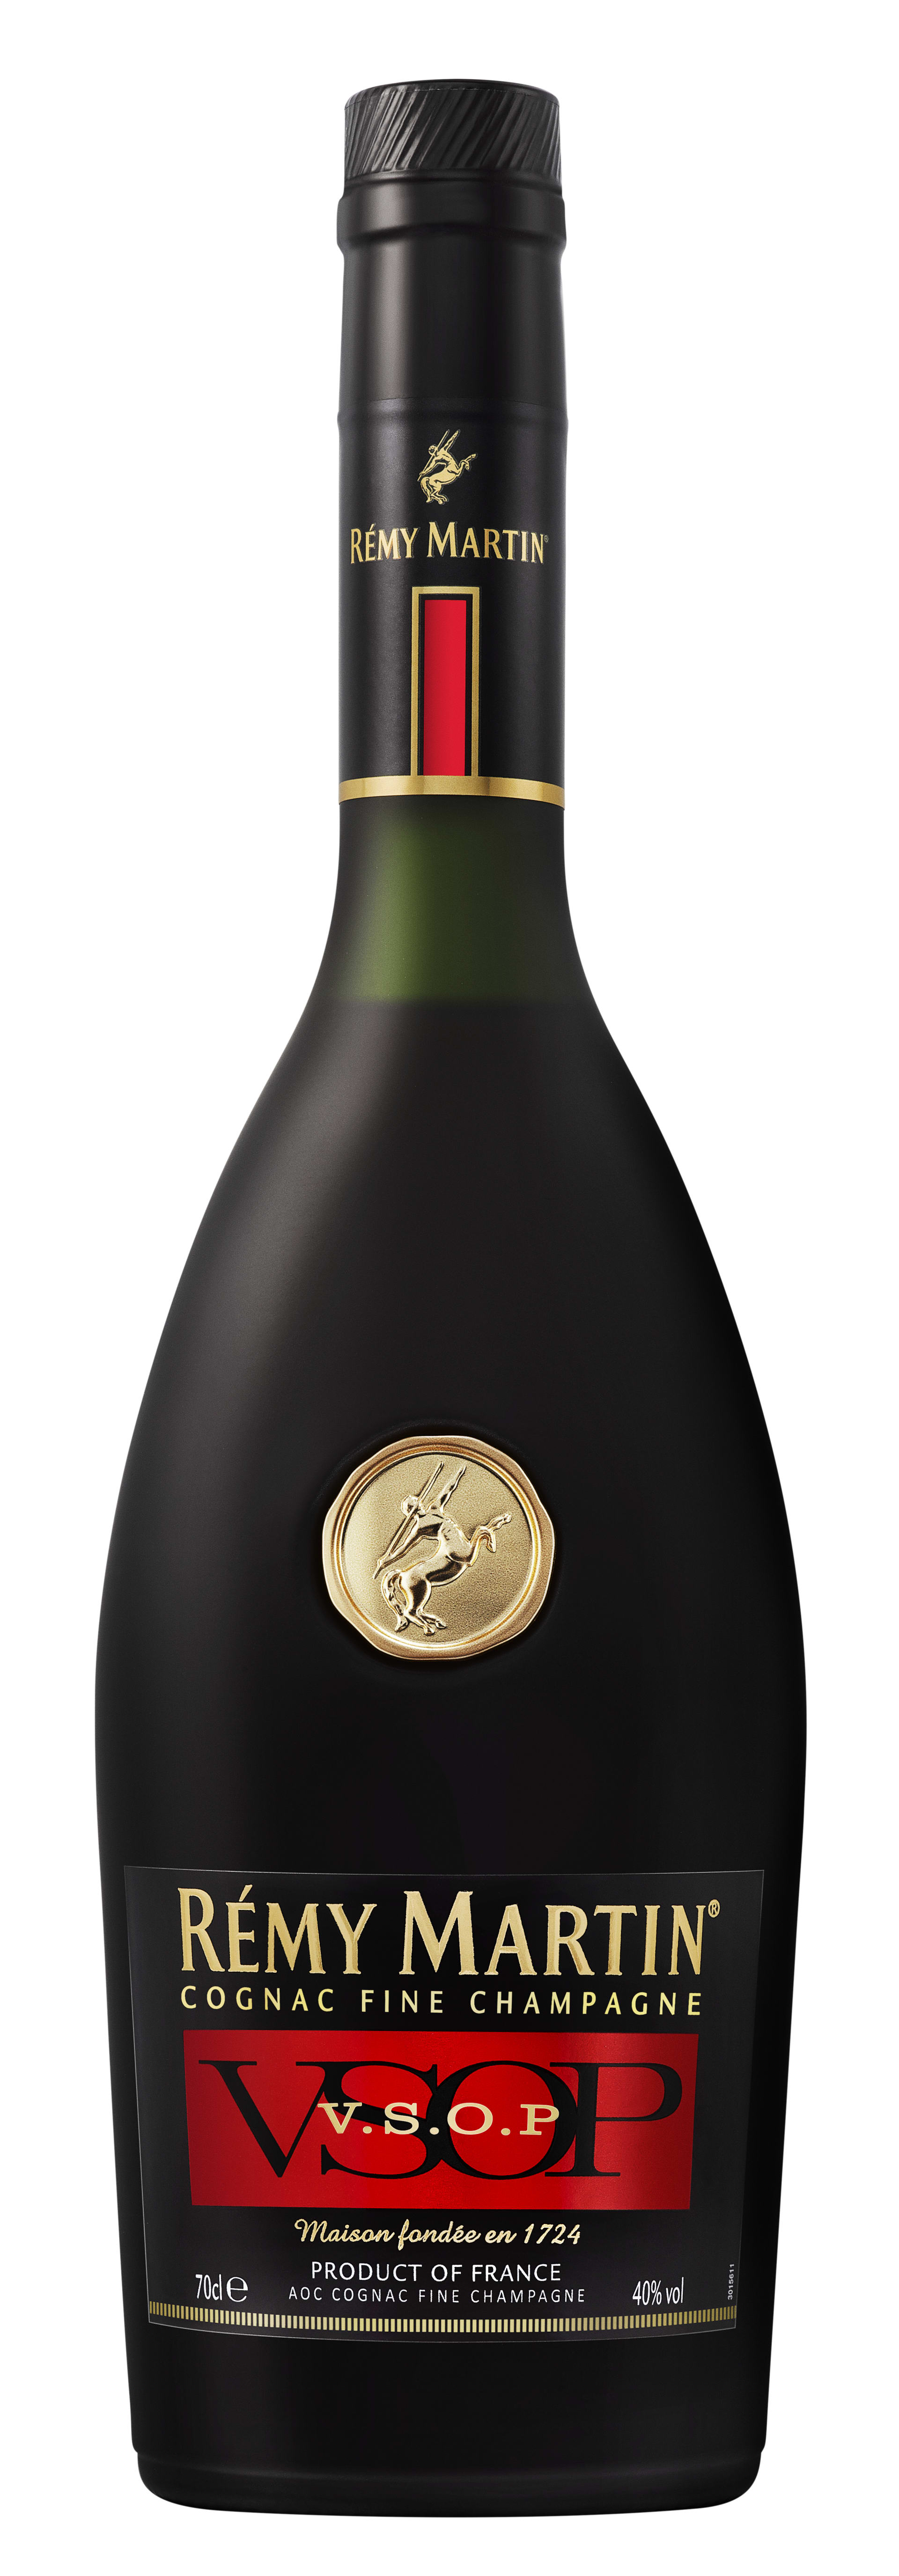 Remy Martin Champagne Cognac VSOP 375ml - MoreWines